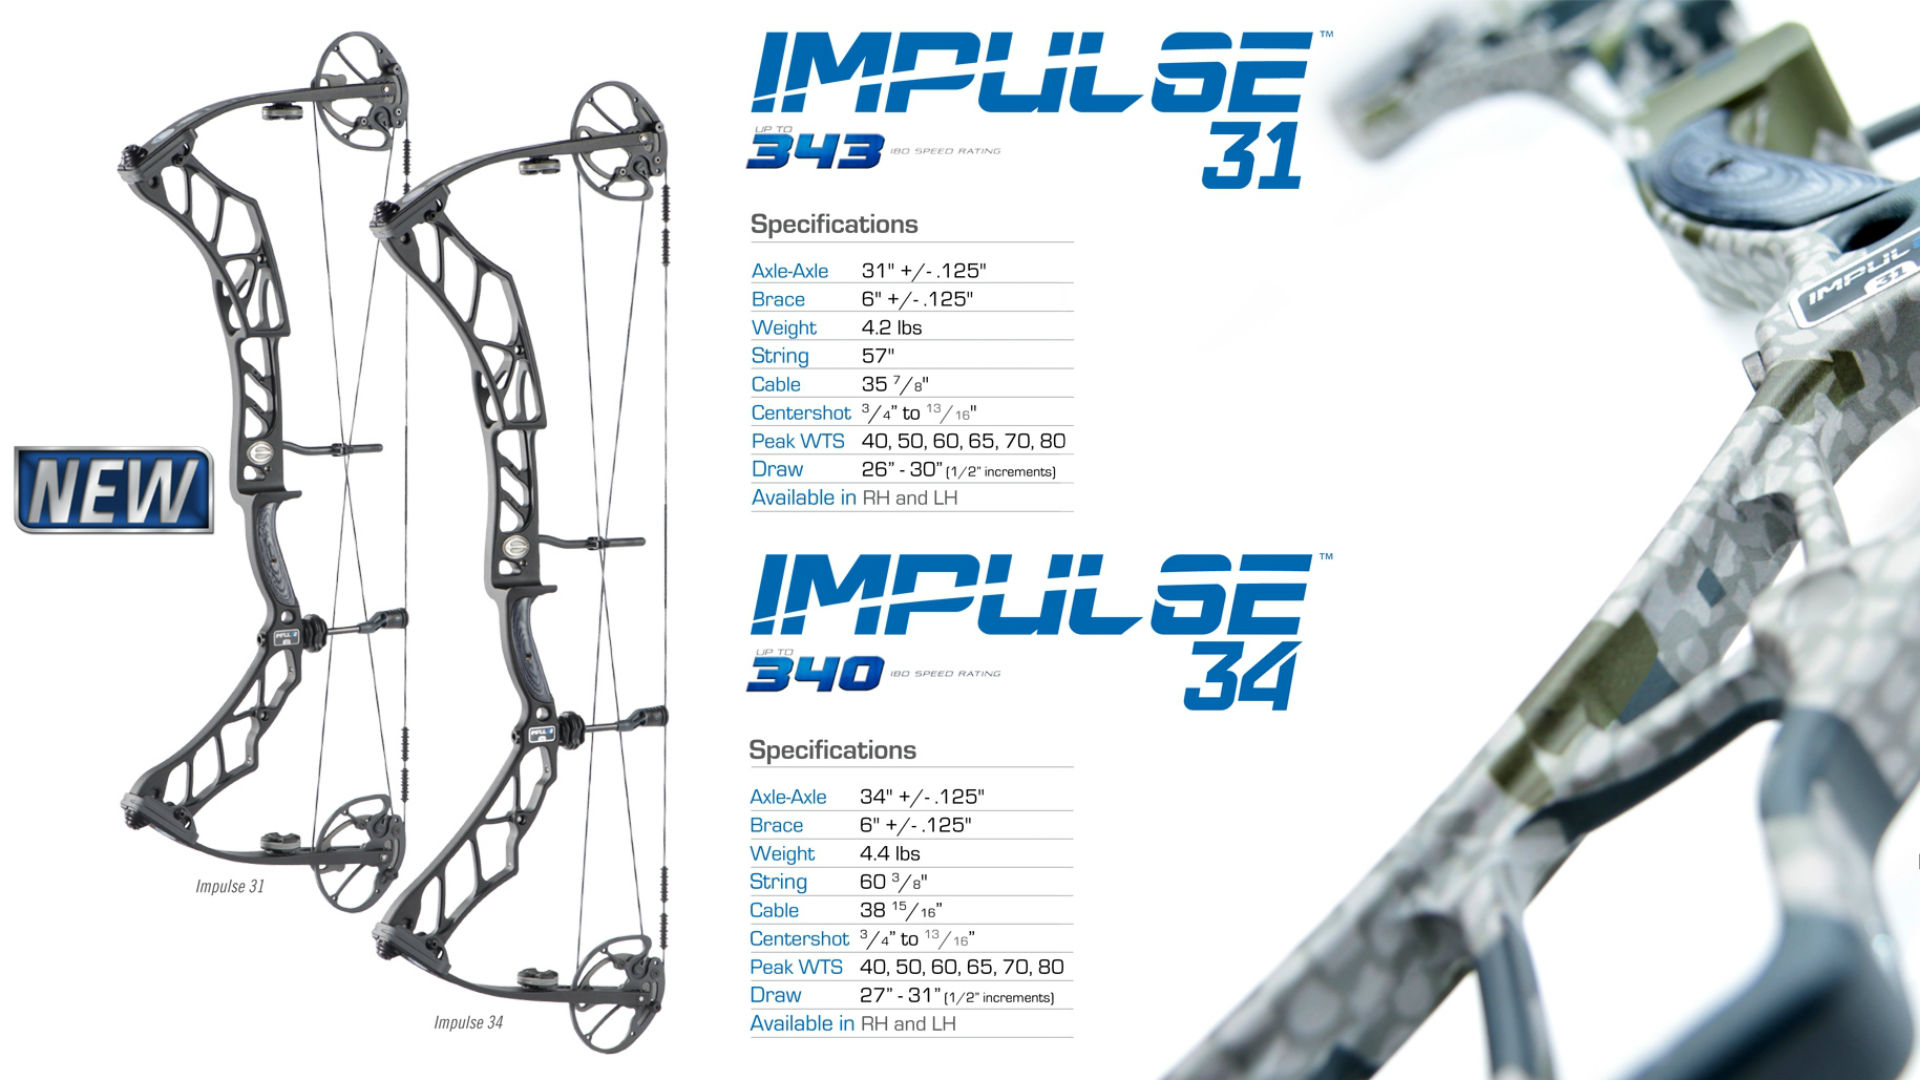 Elite Archery announces 2016 Impulse 31 and 34